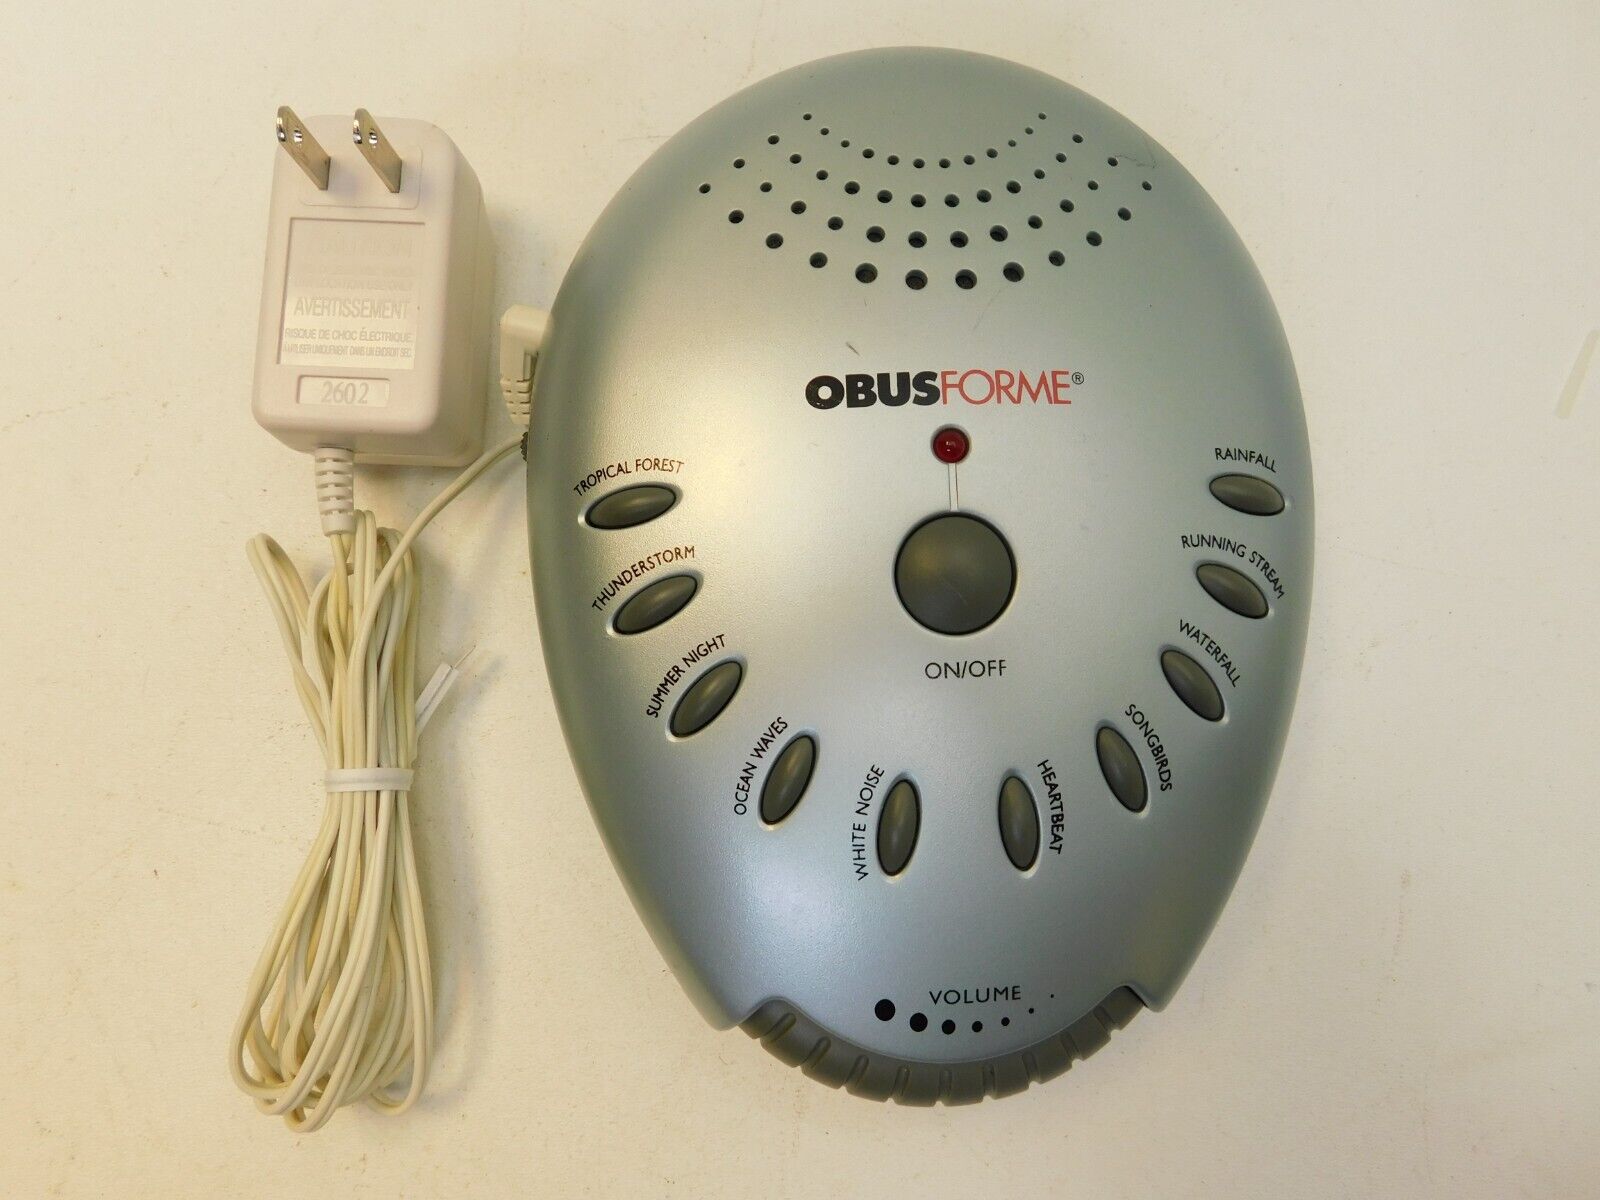 ObusForme Sound Therapy Relaxation Machine White noise rain bi...